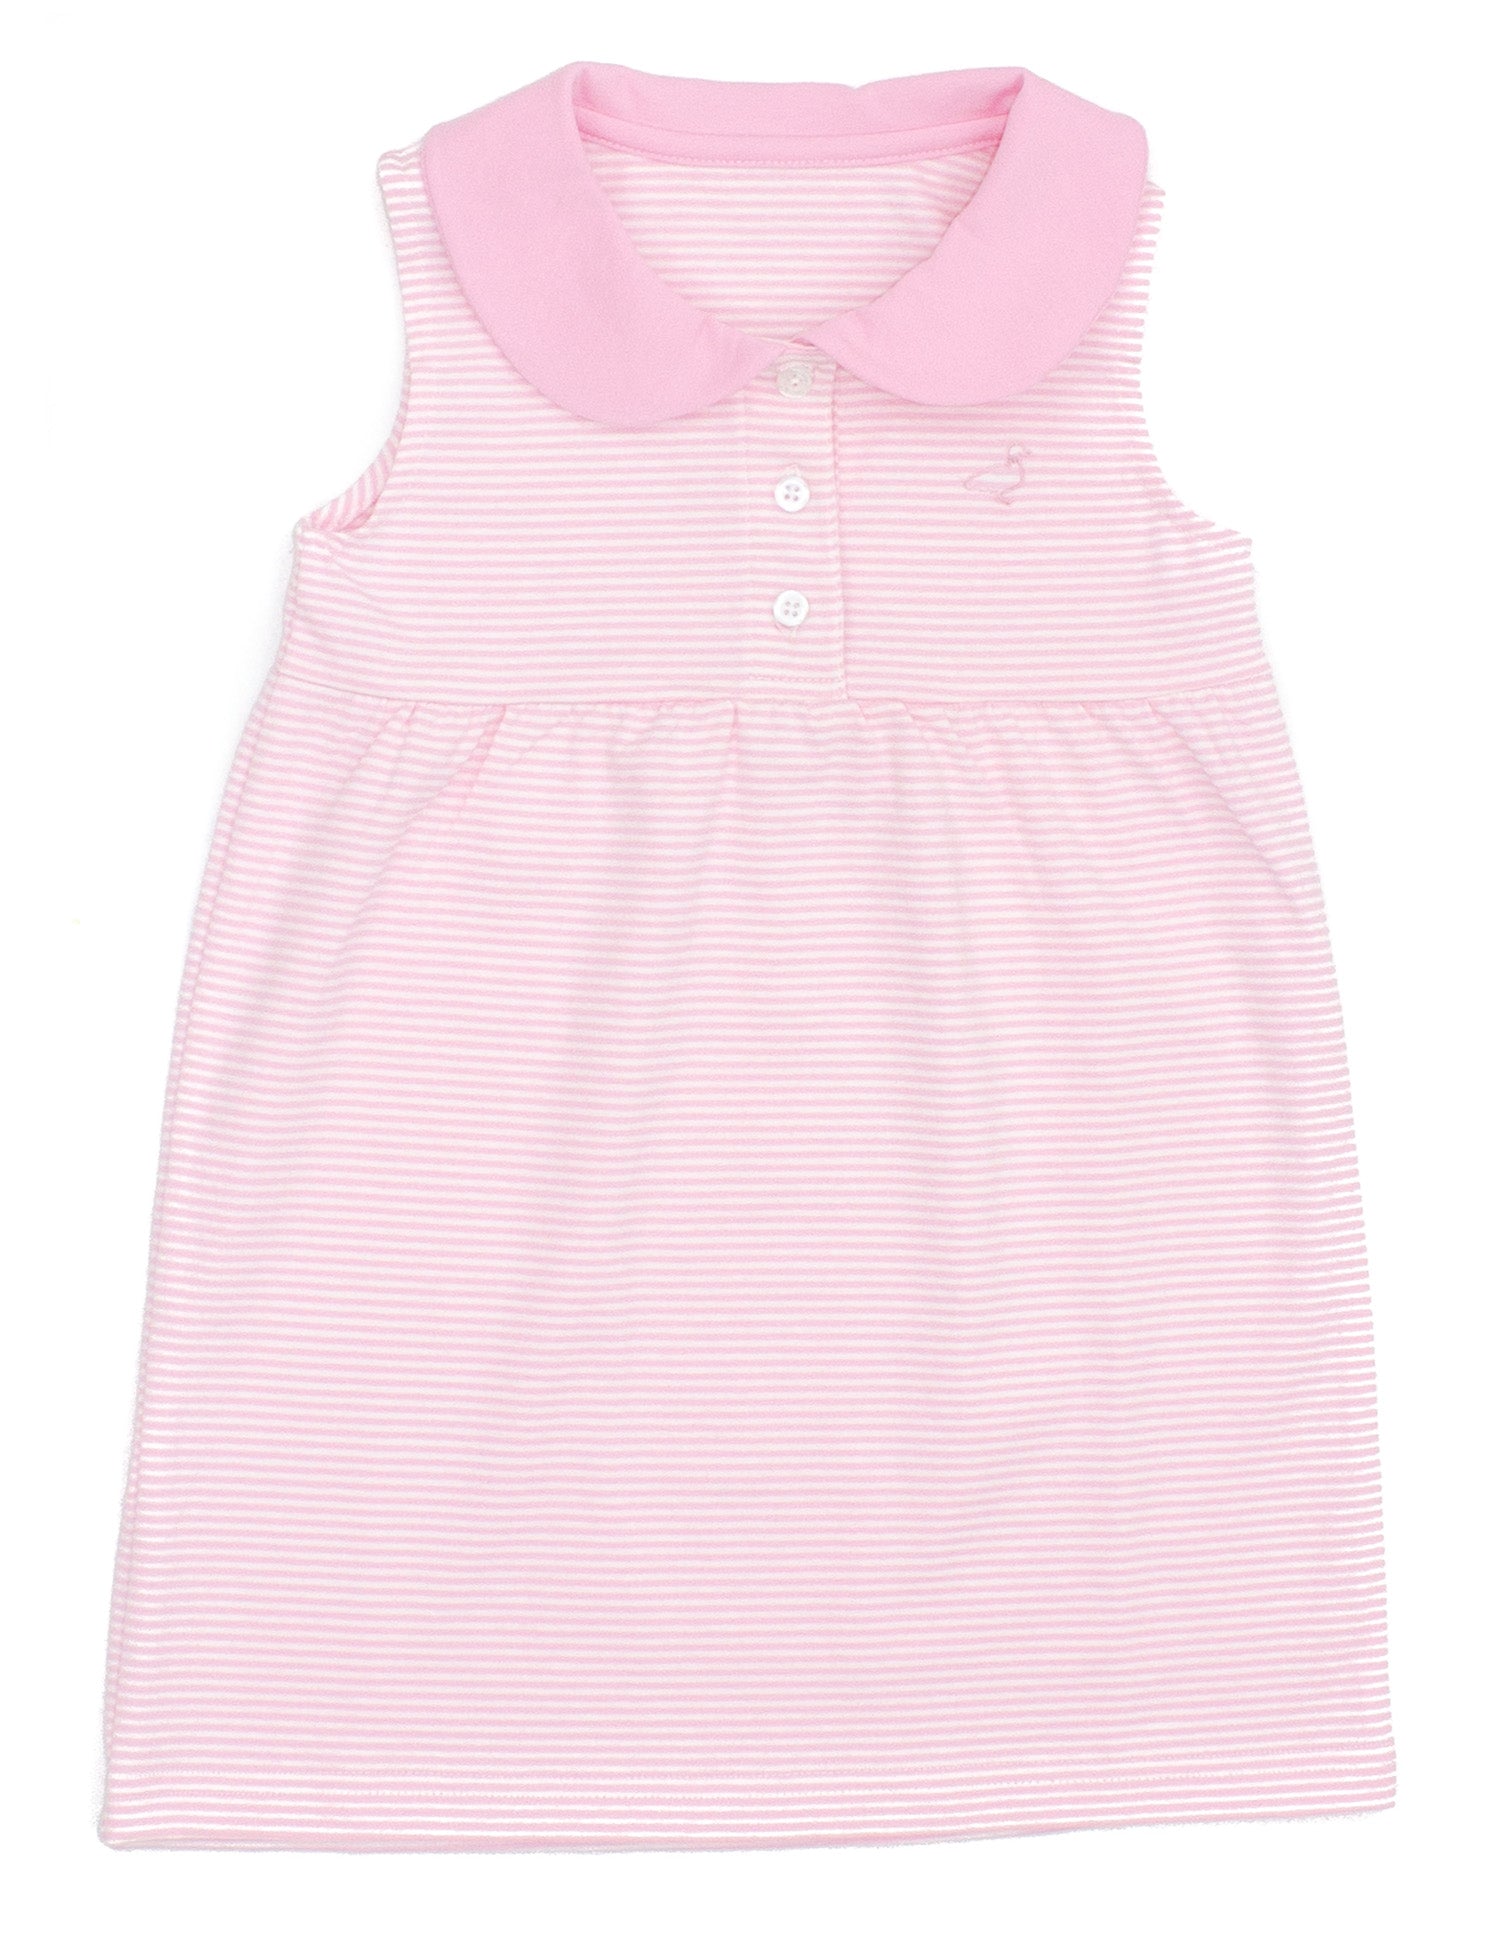 Girls Jackson Stripe Dress Light Pink - Properly Tied *Final Sale*